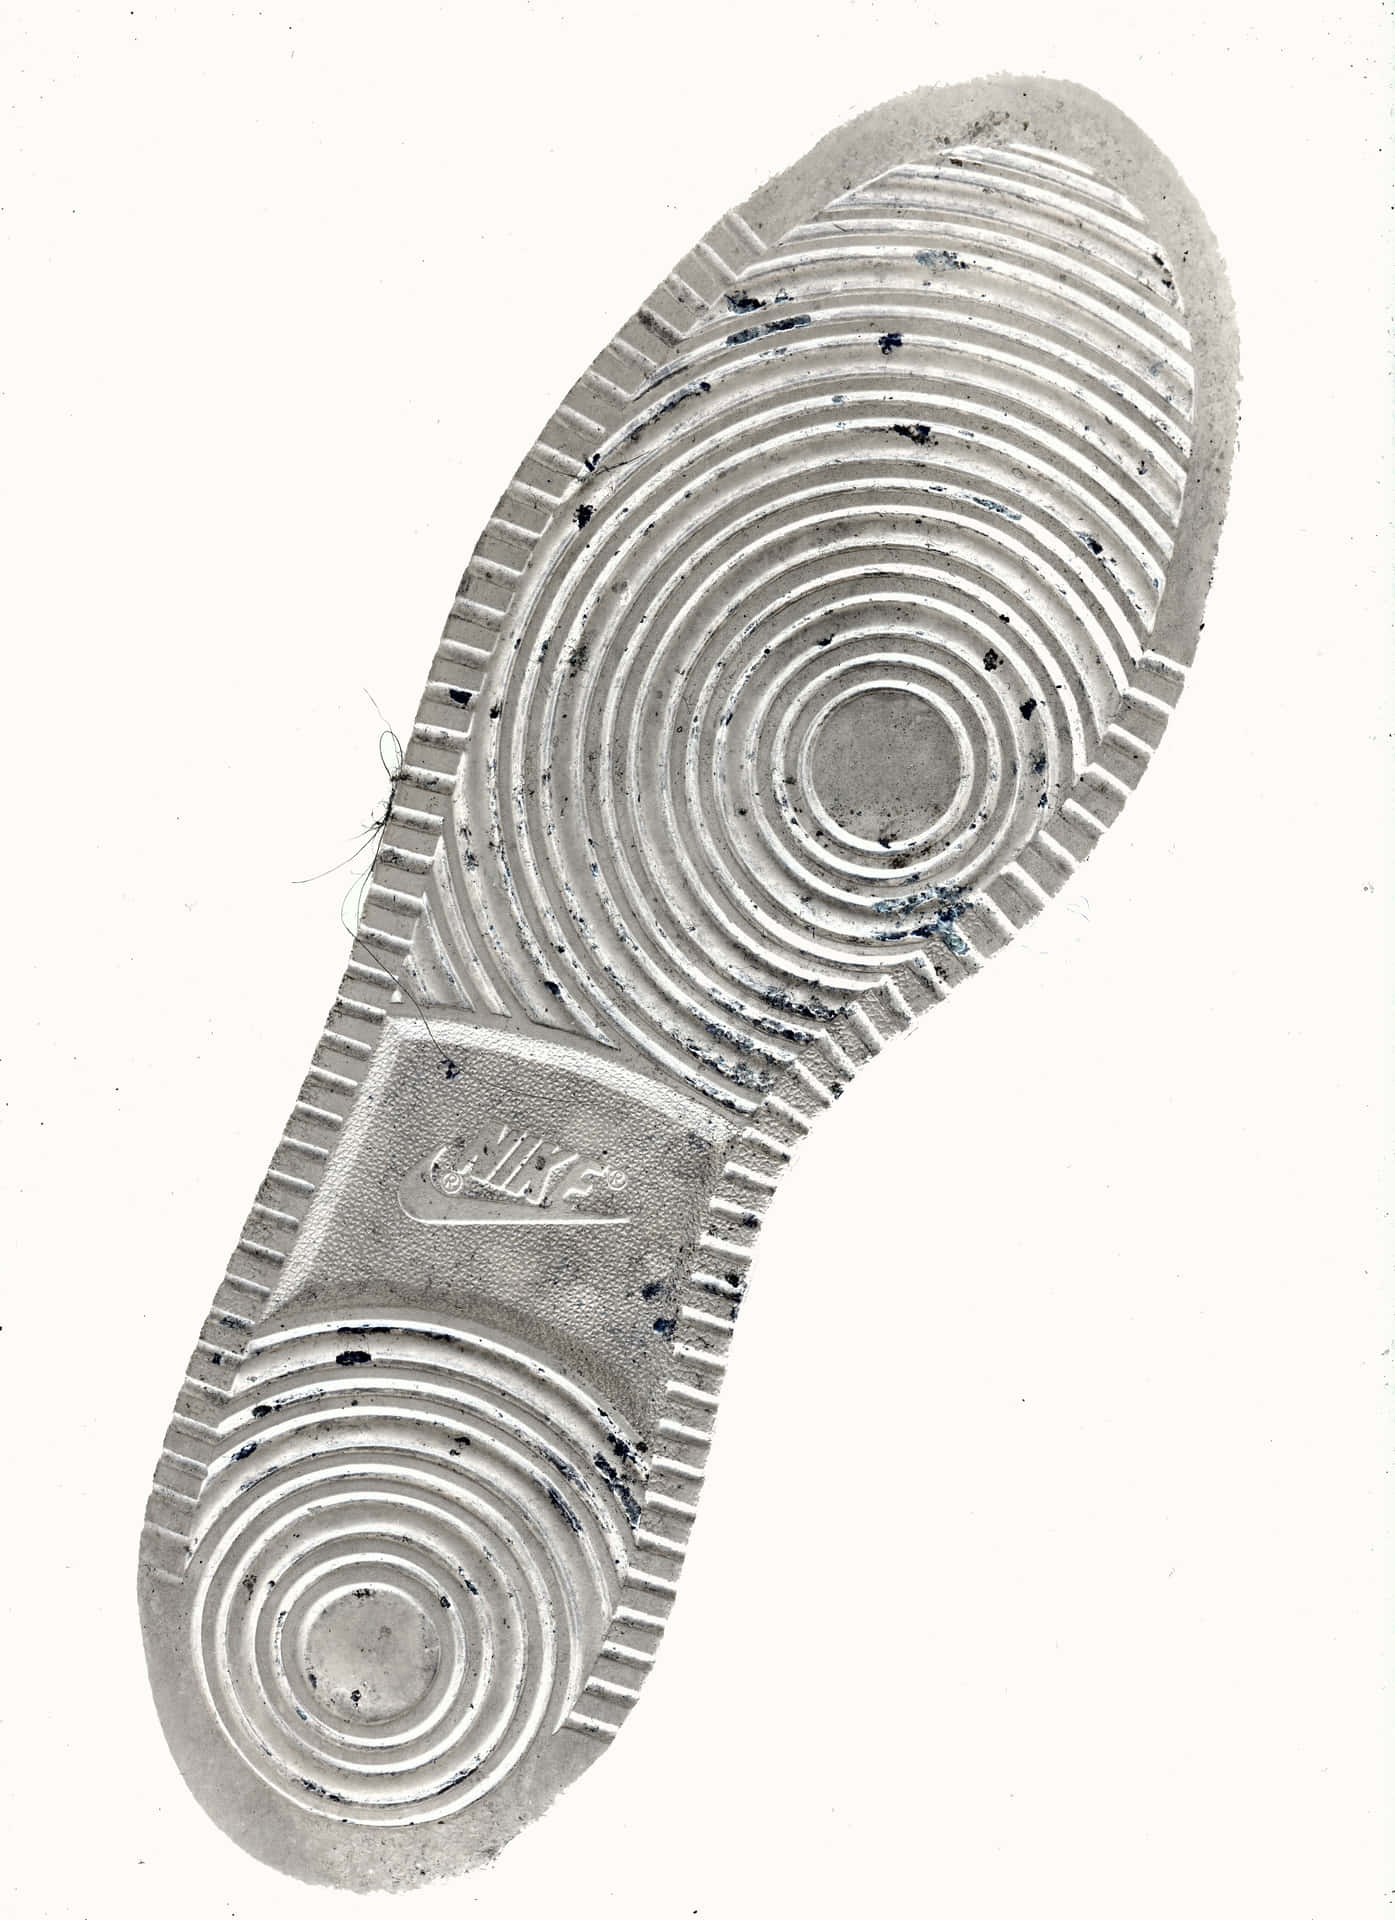 Nike Sko Såle Print Tapet: Hop ind i modebranchen med Nike skosåleprinttapet. Wallpaper